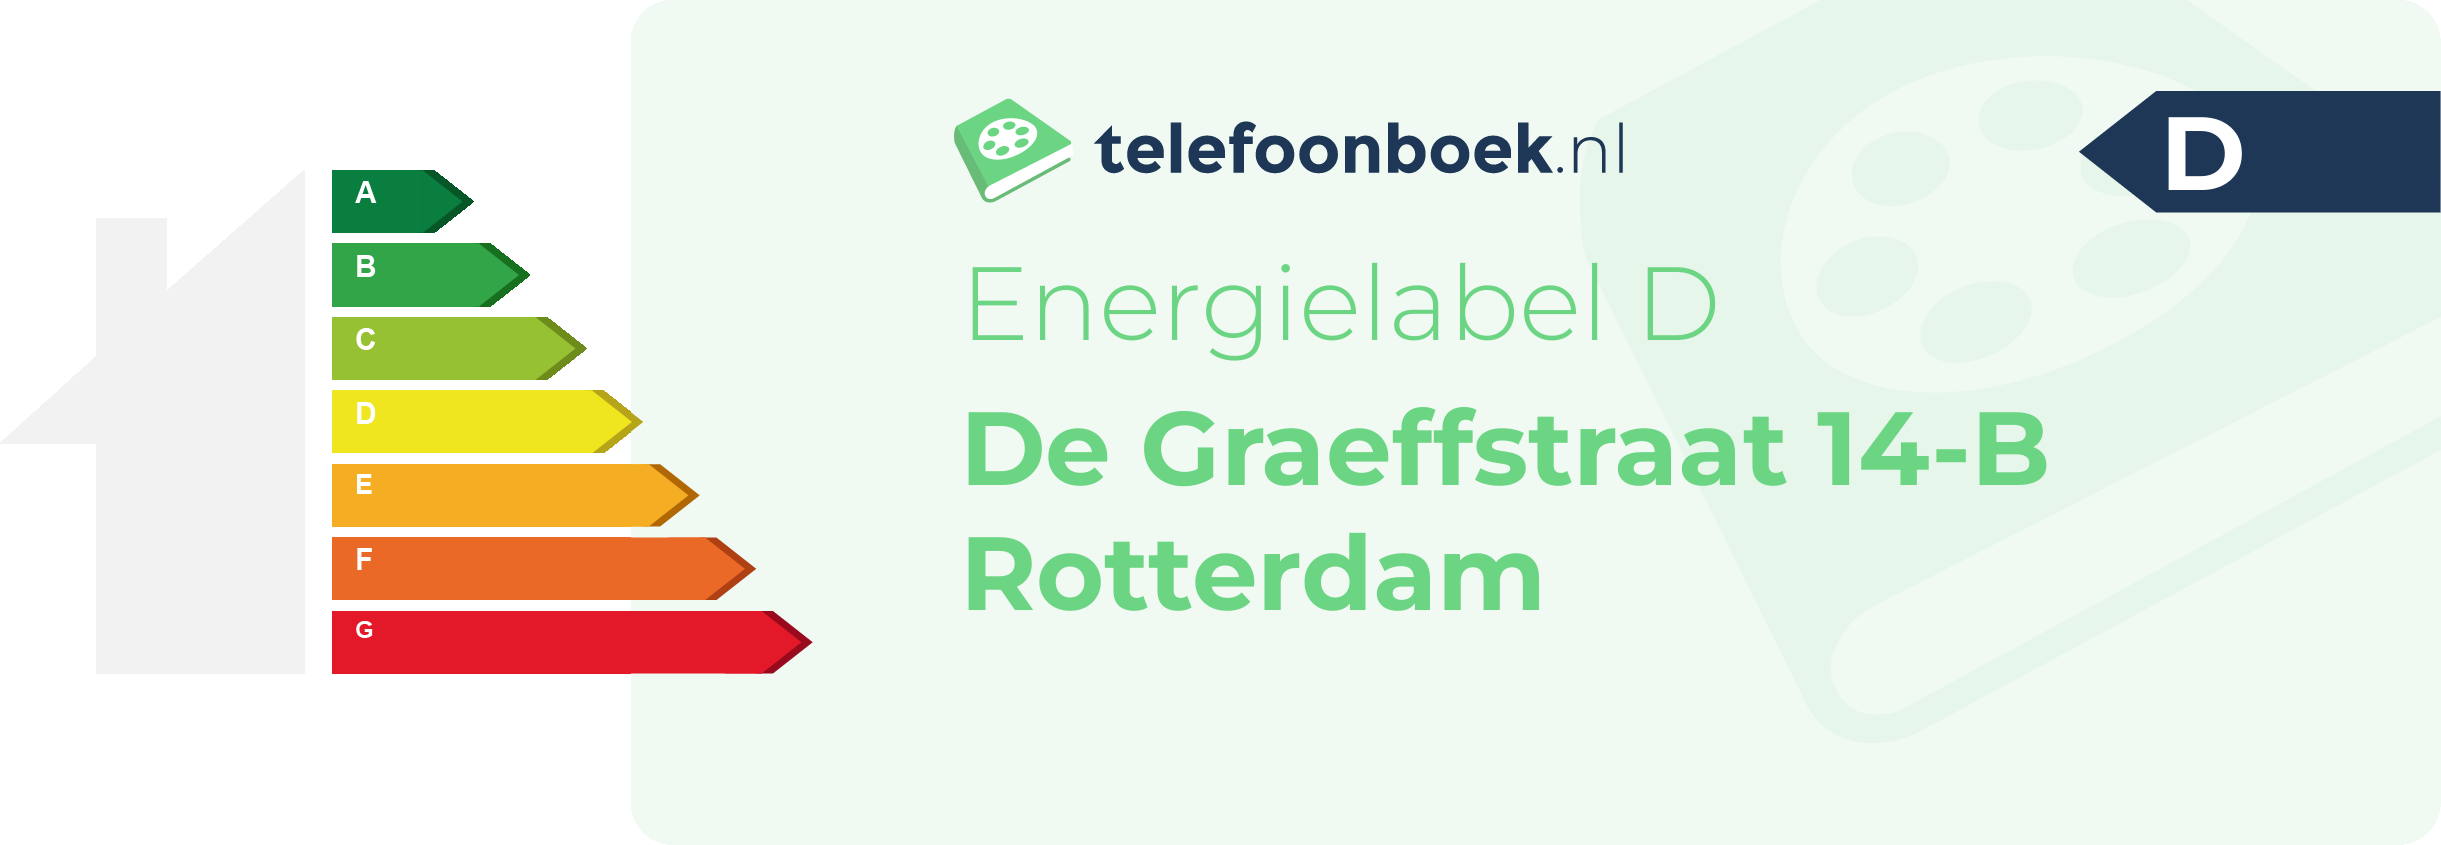 Energielabel De Graeffstraat 14-B Rotterdam